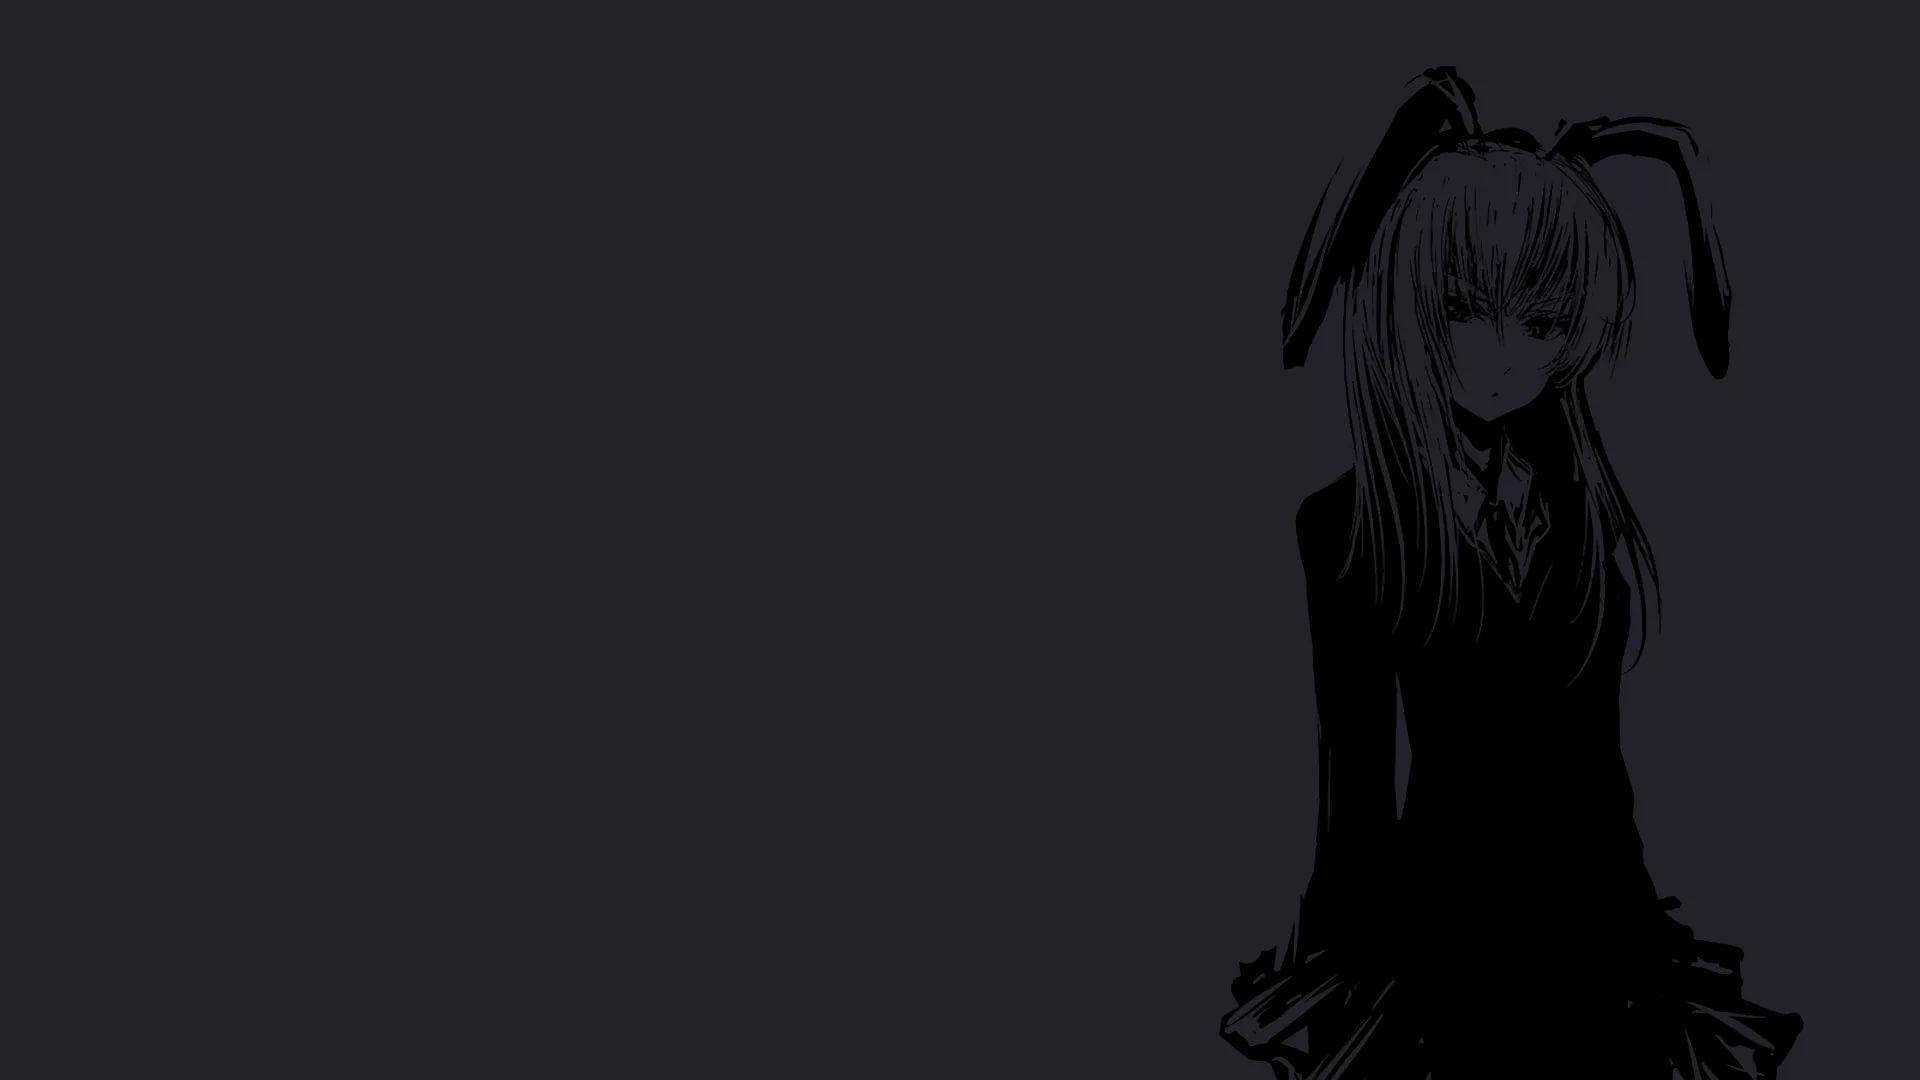 Free Dark Anime Wallpaper Downloads, [400+] Dark Anime Wallpapers for FREE  